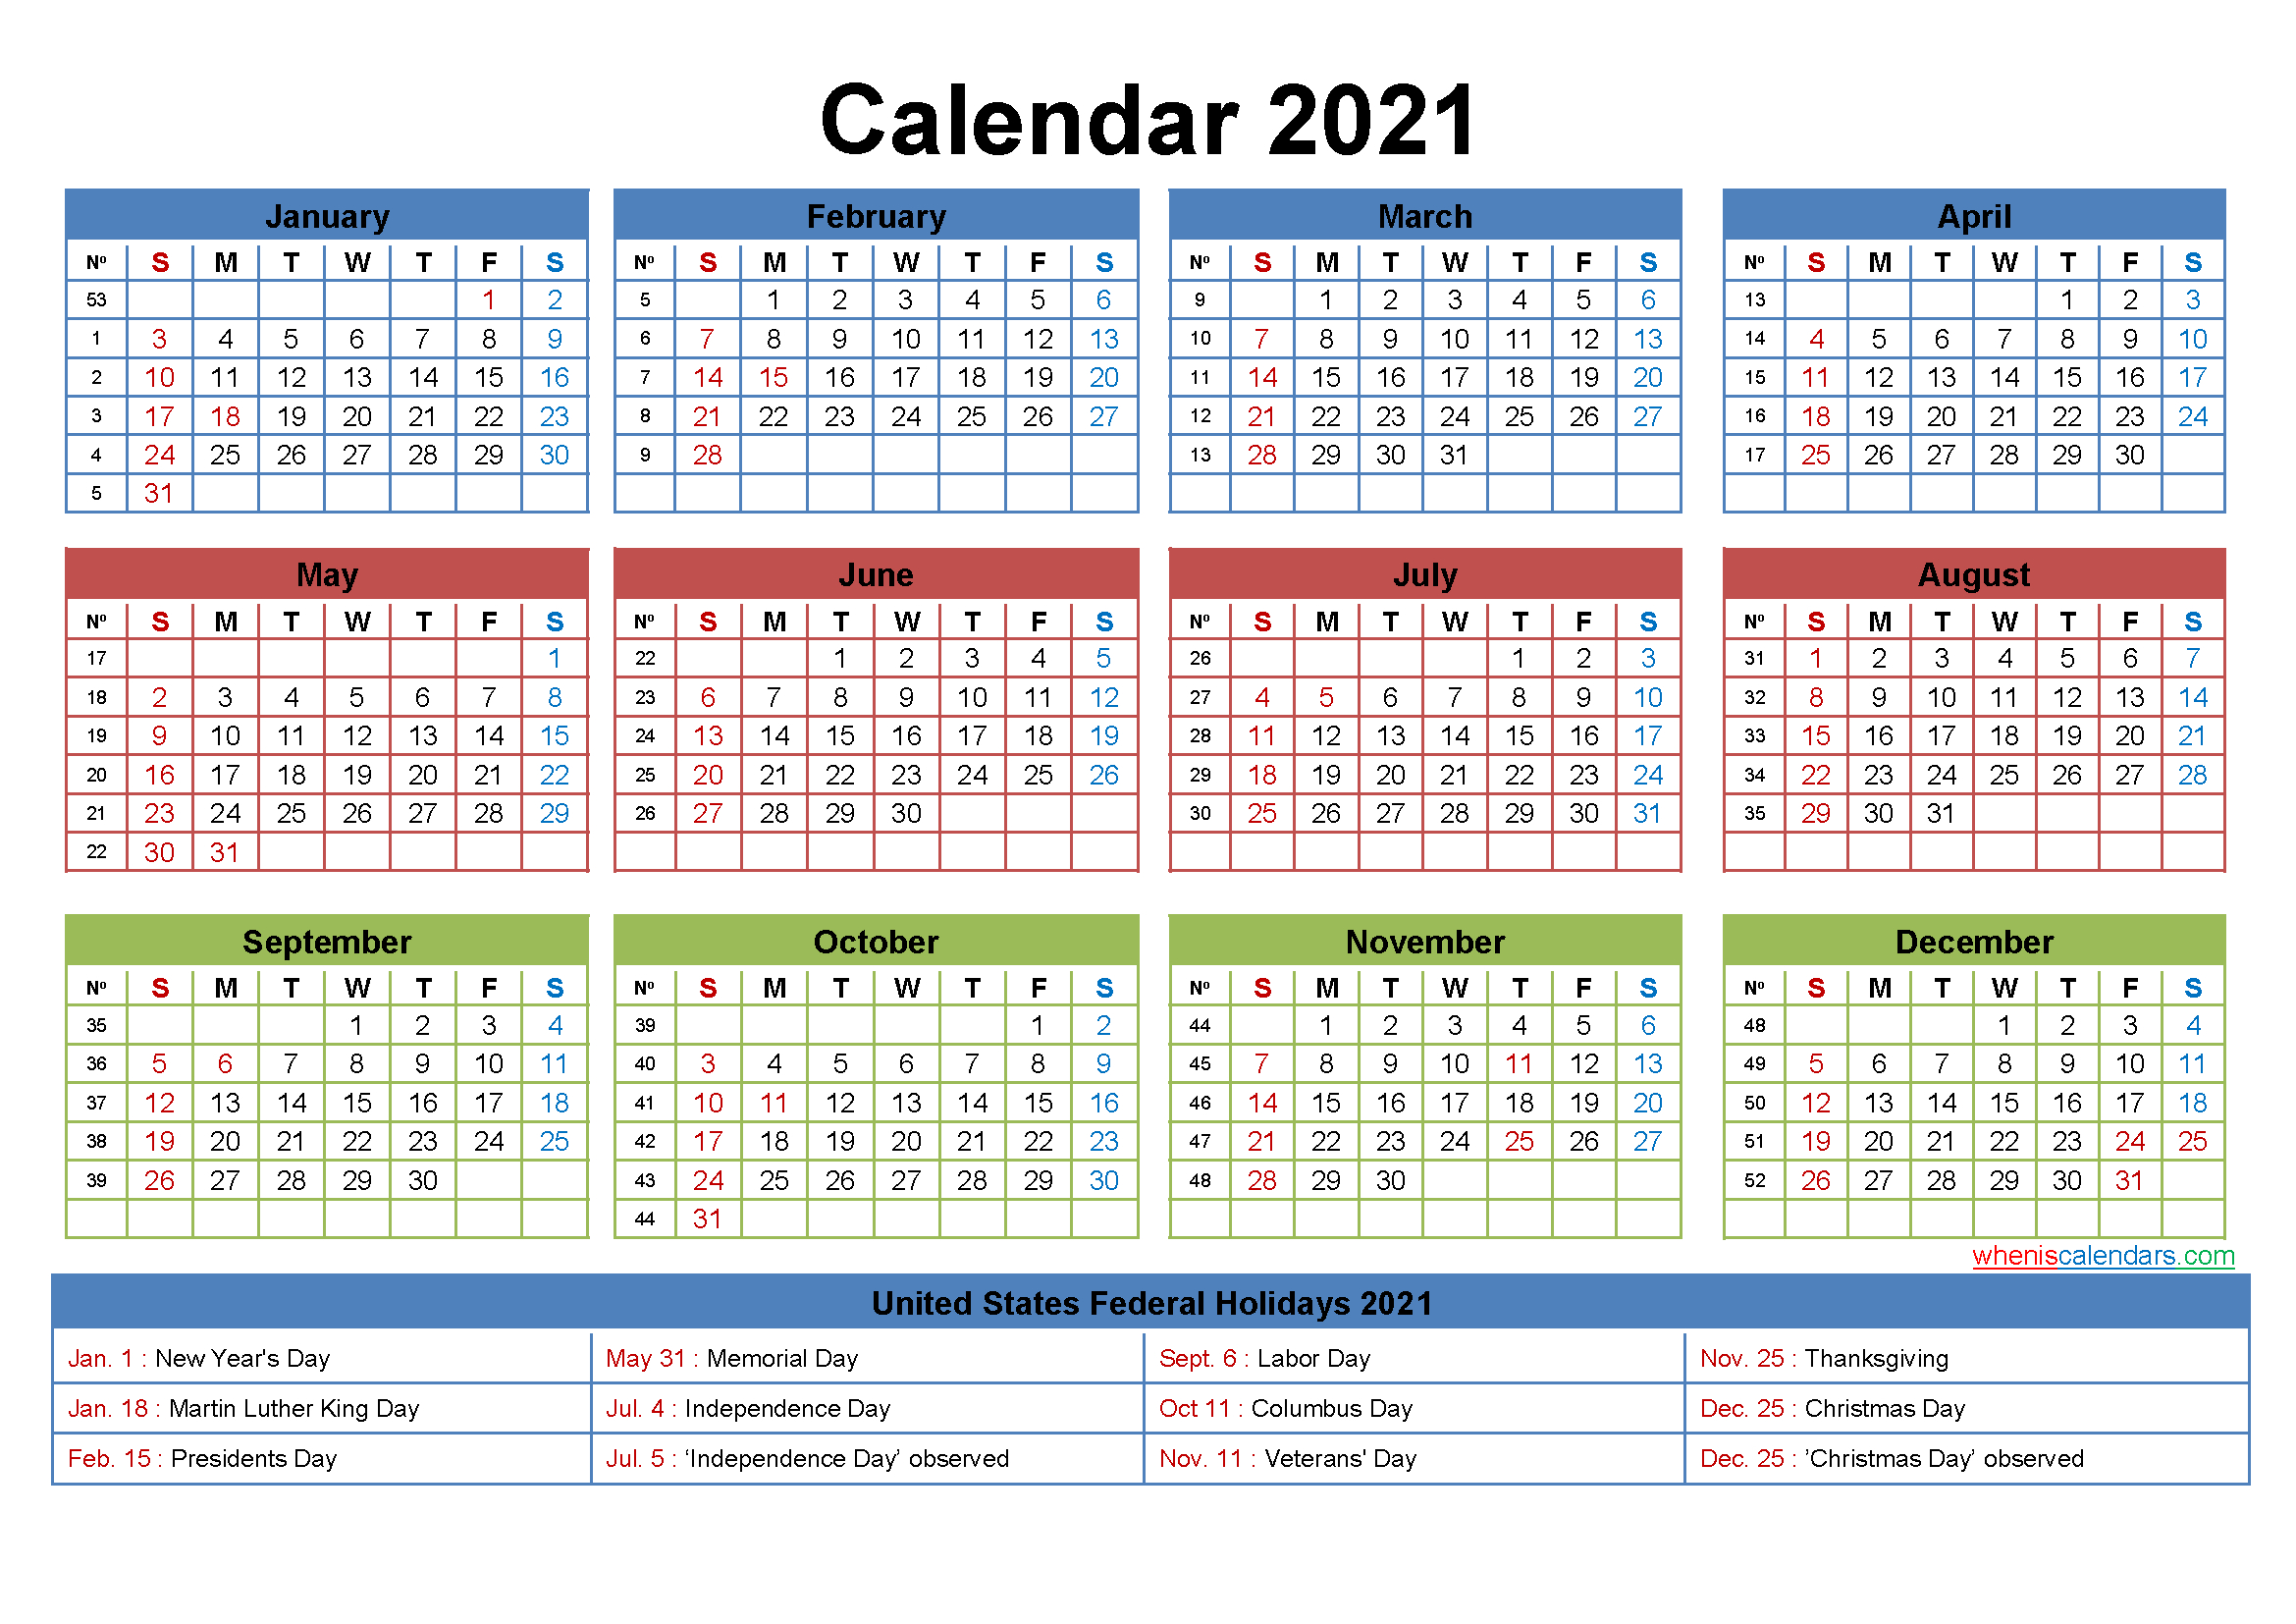 Free 2021 Printable Calendar With Holidays - Free Printable 2021 Monthly Calendar With Holidays-2 Page 2021 Calendar